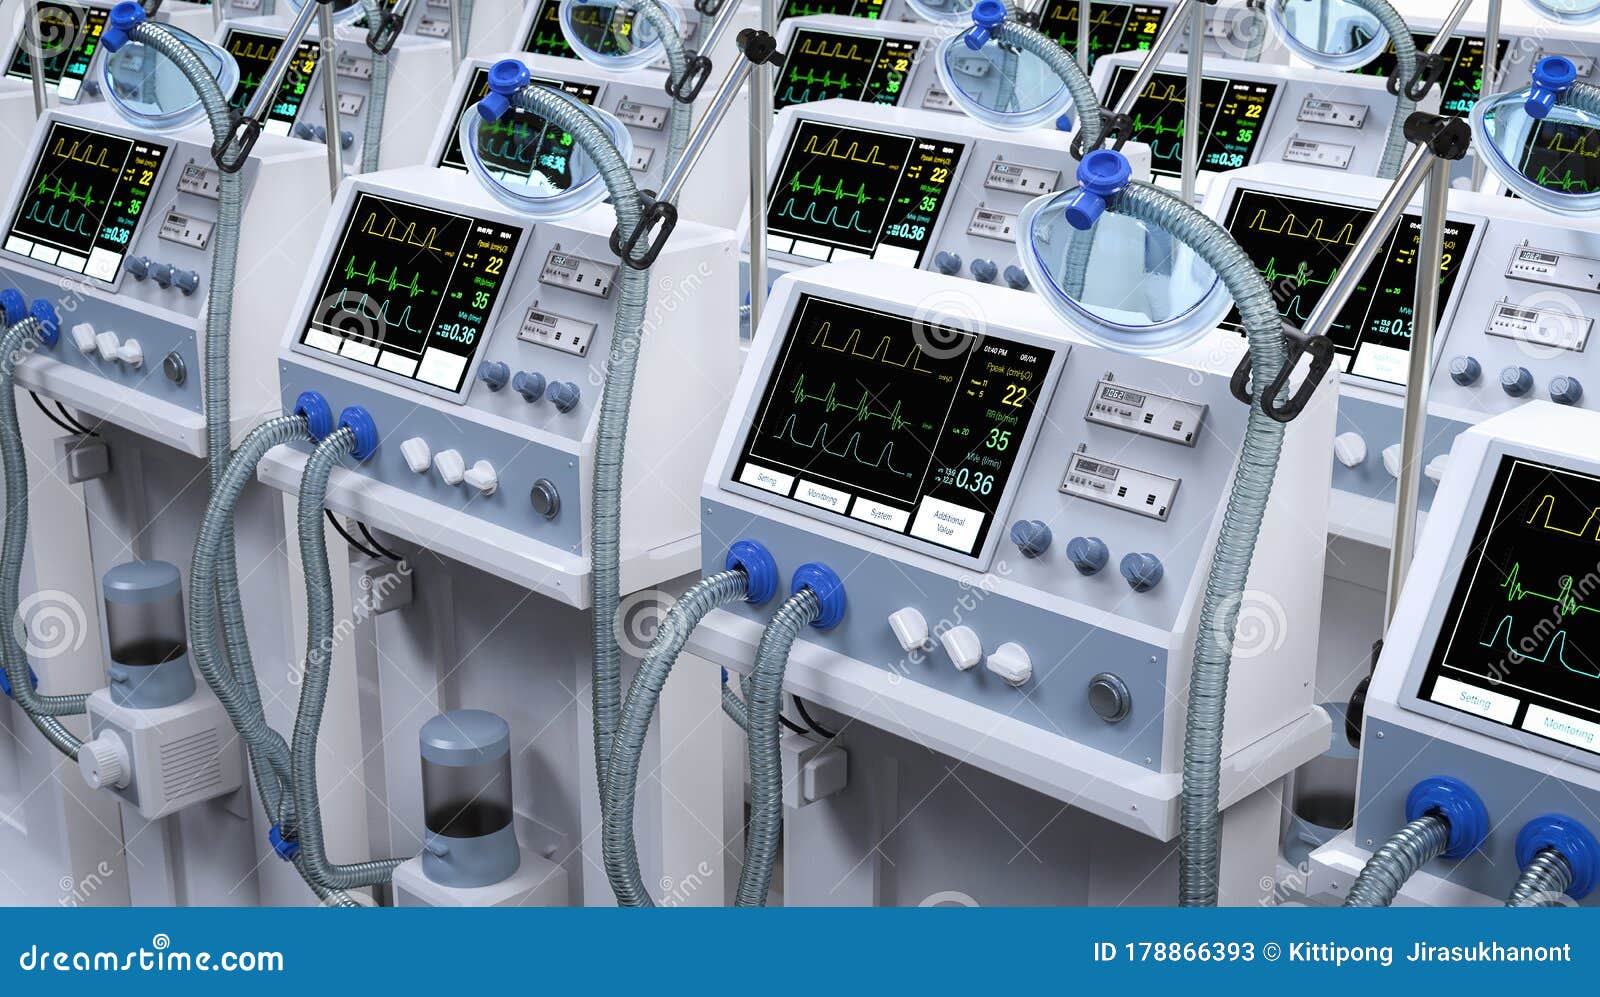 group of ventilator machines